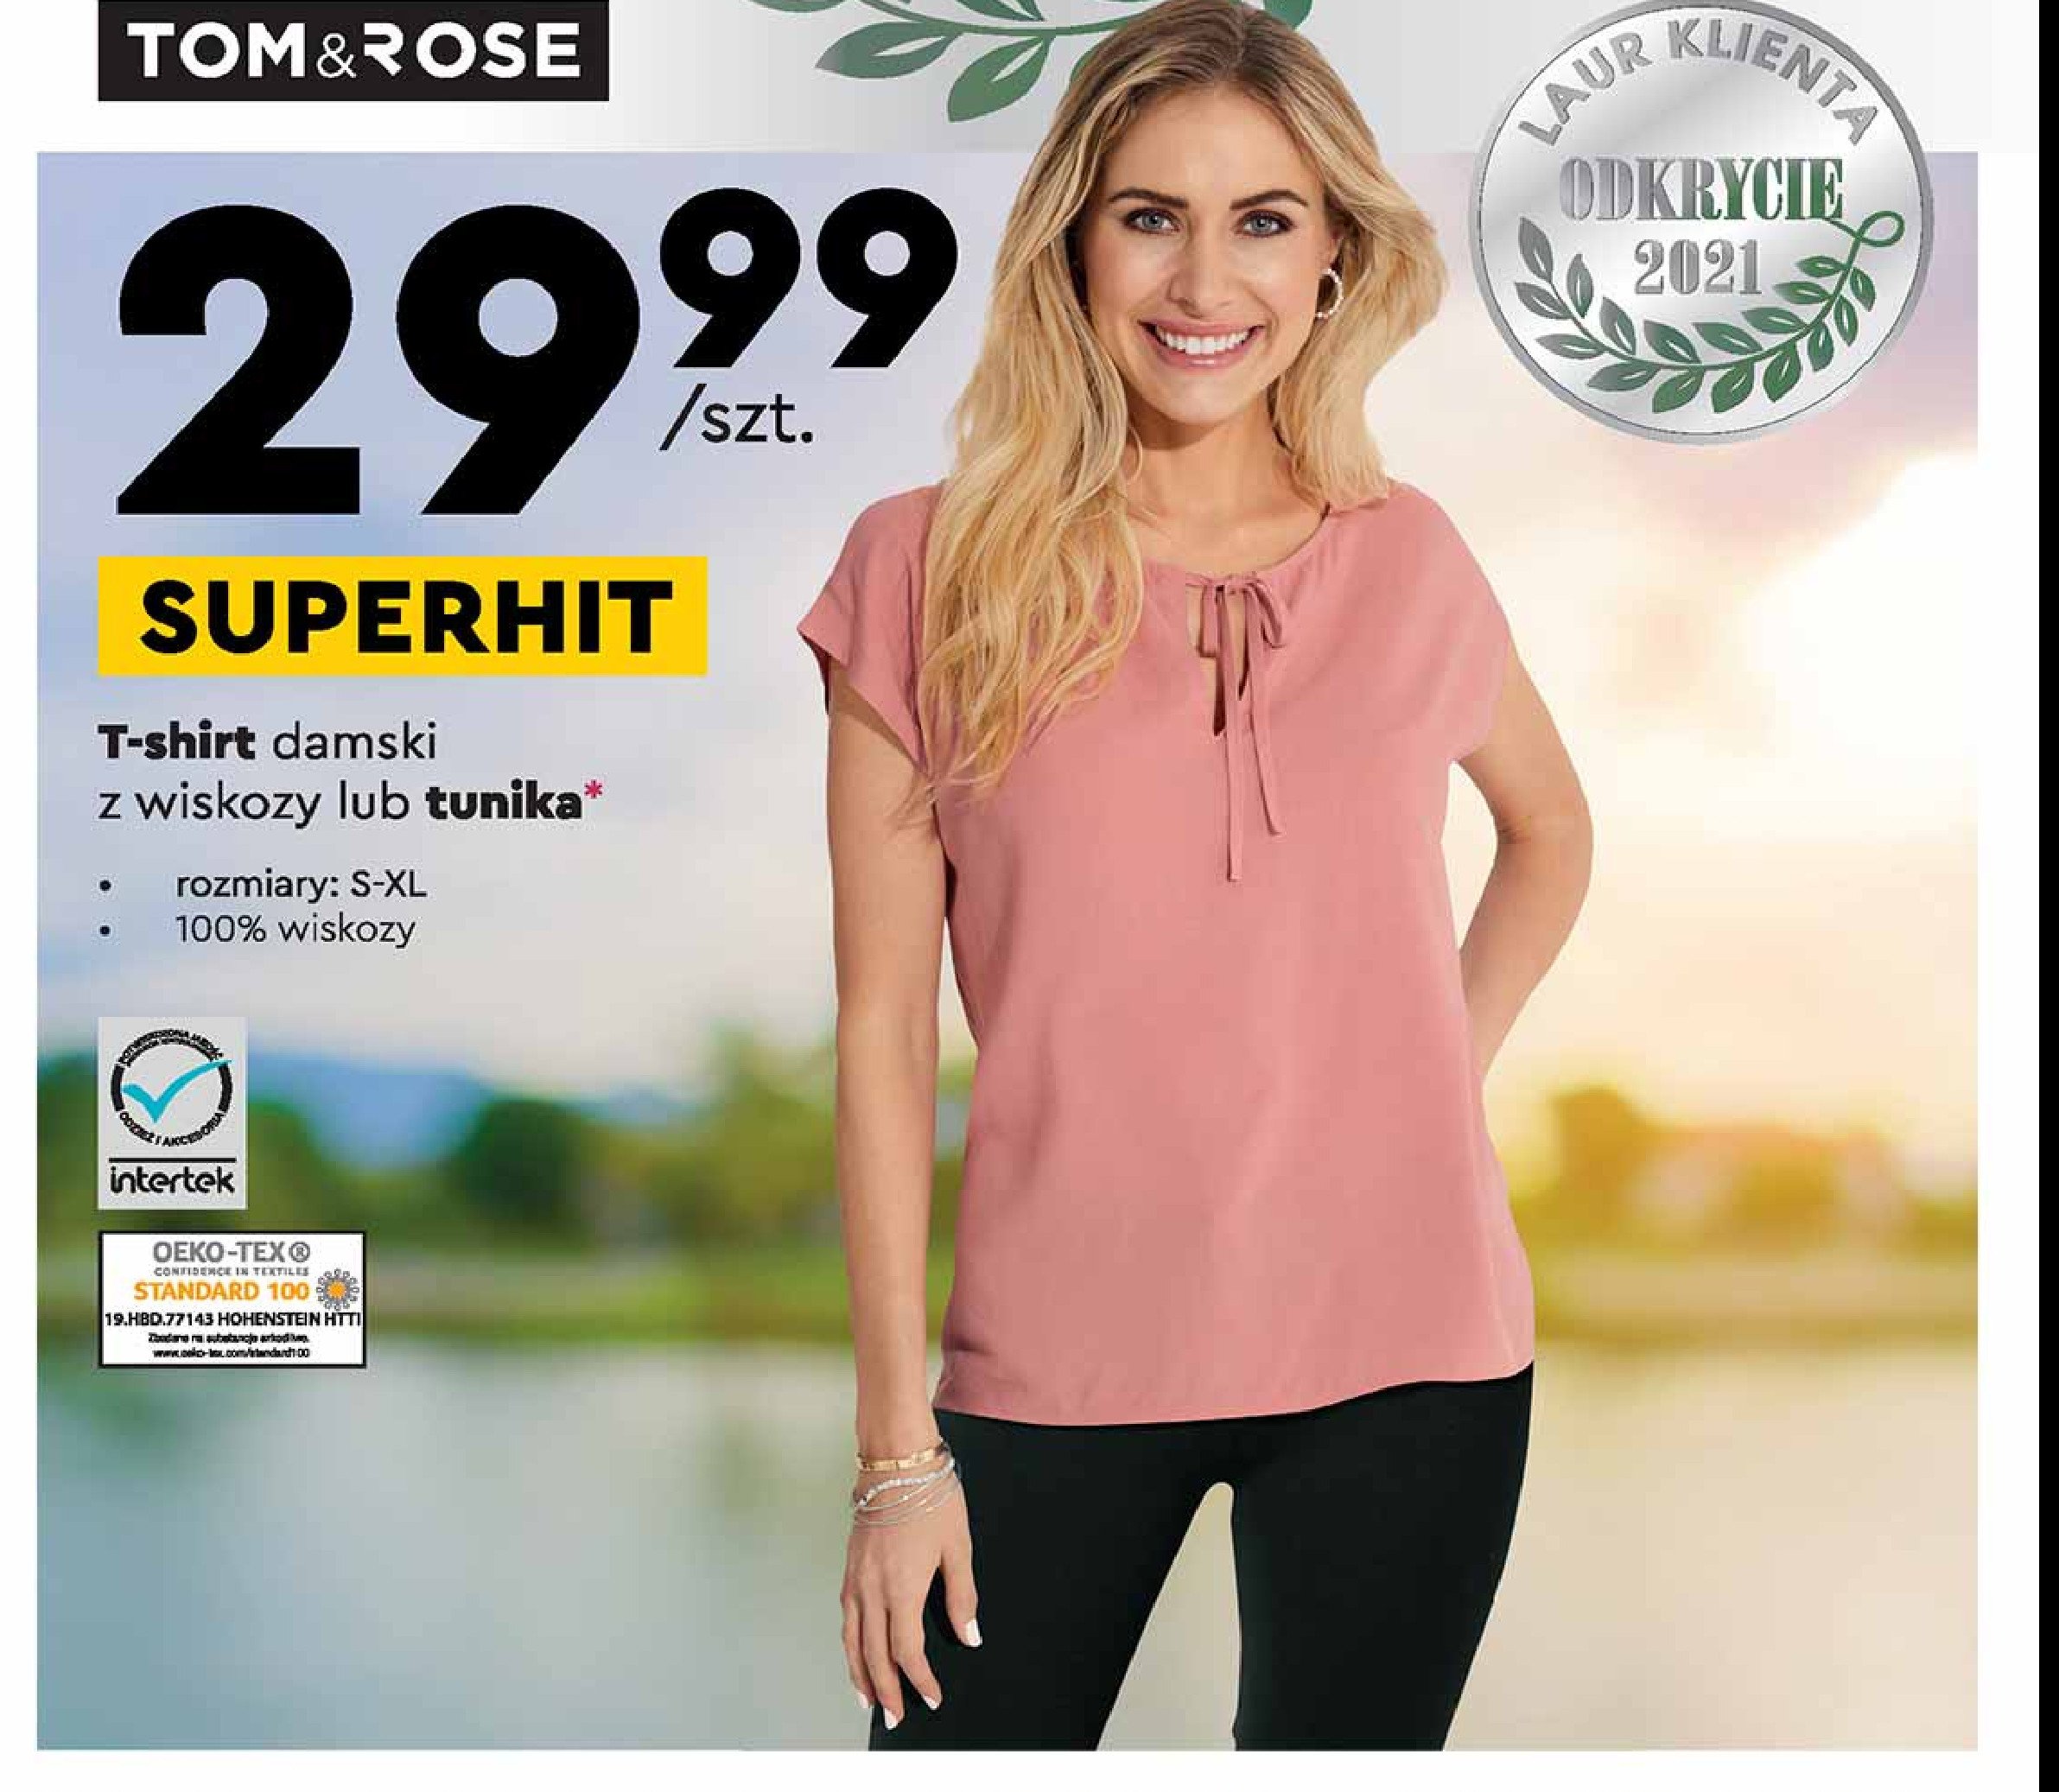 T-shirt damski s-xl Tom & rose promocja